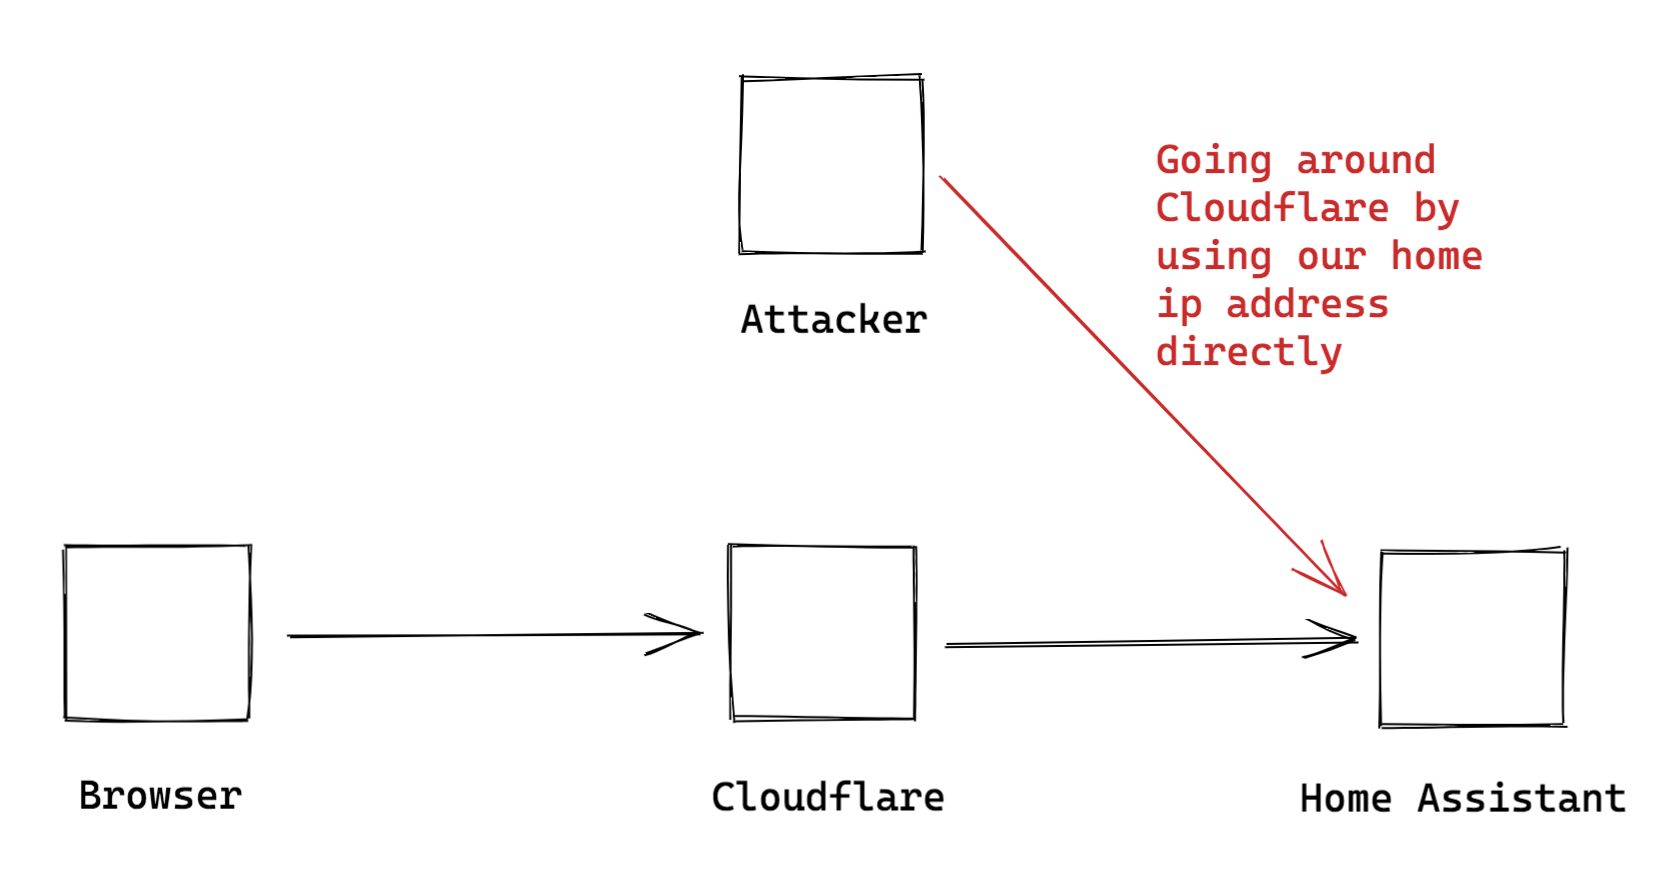 Attacker avoiding Cloudflare